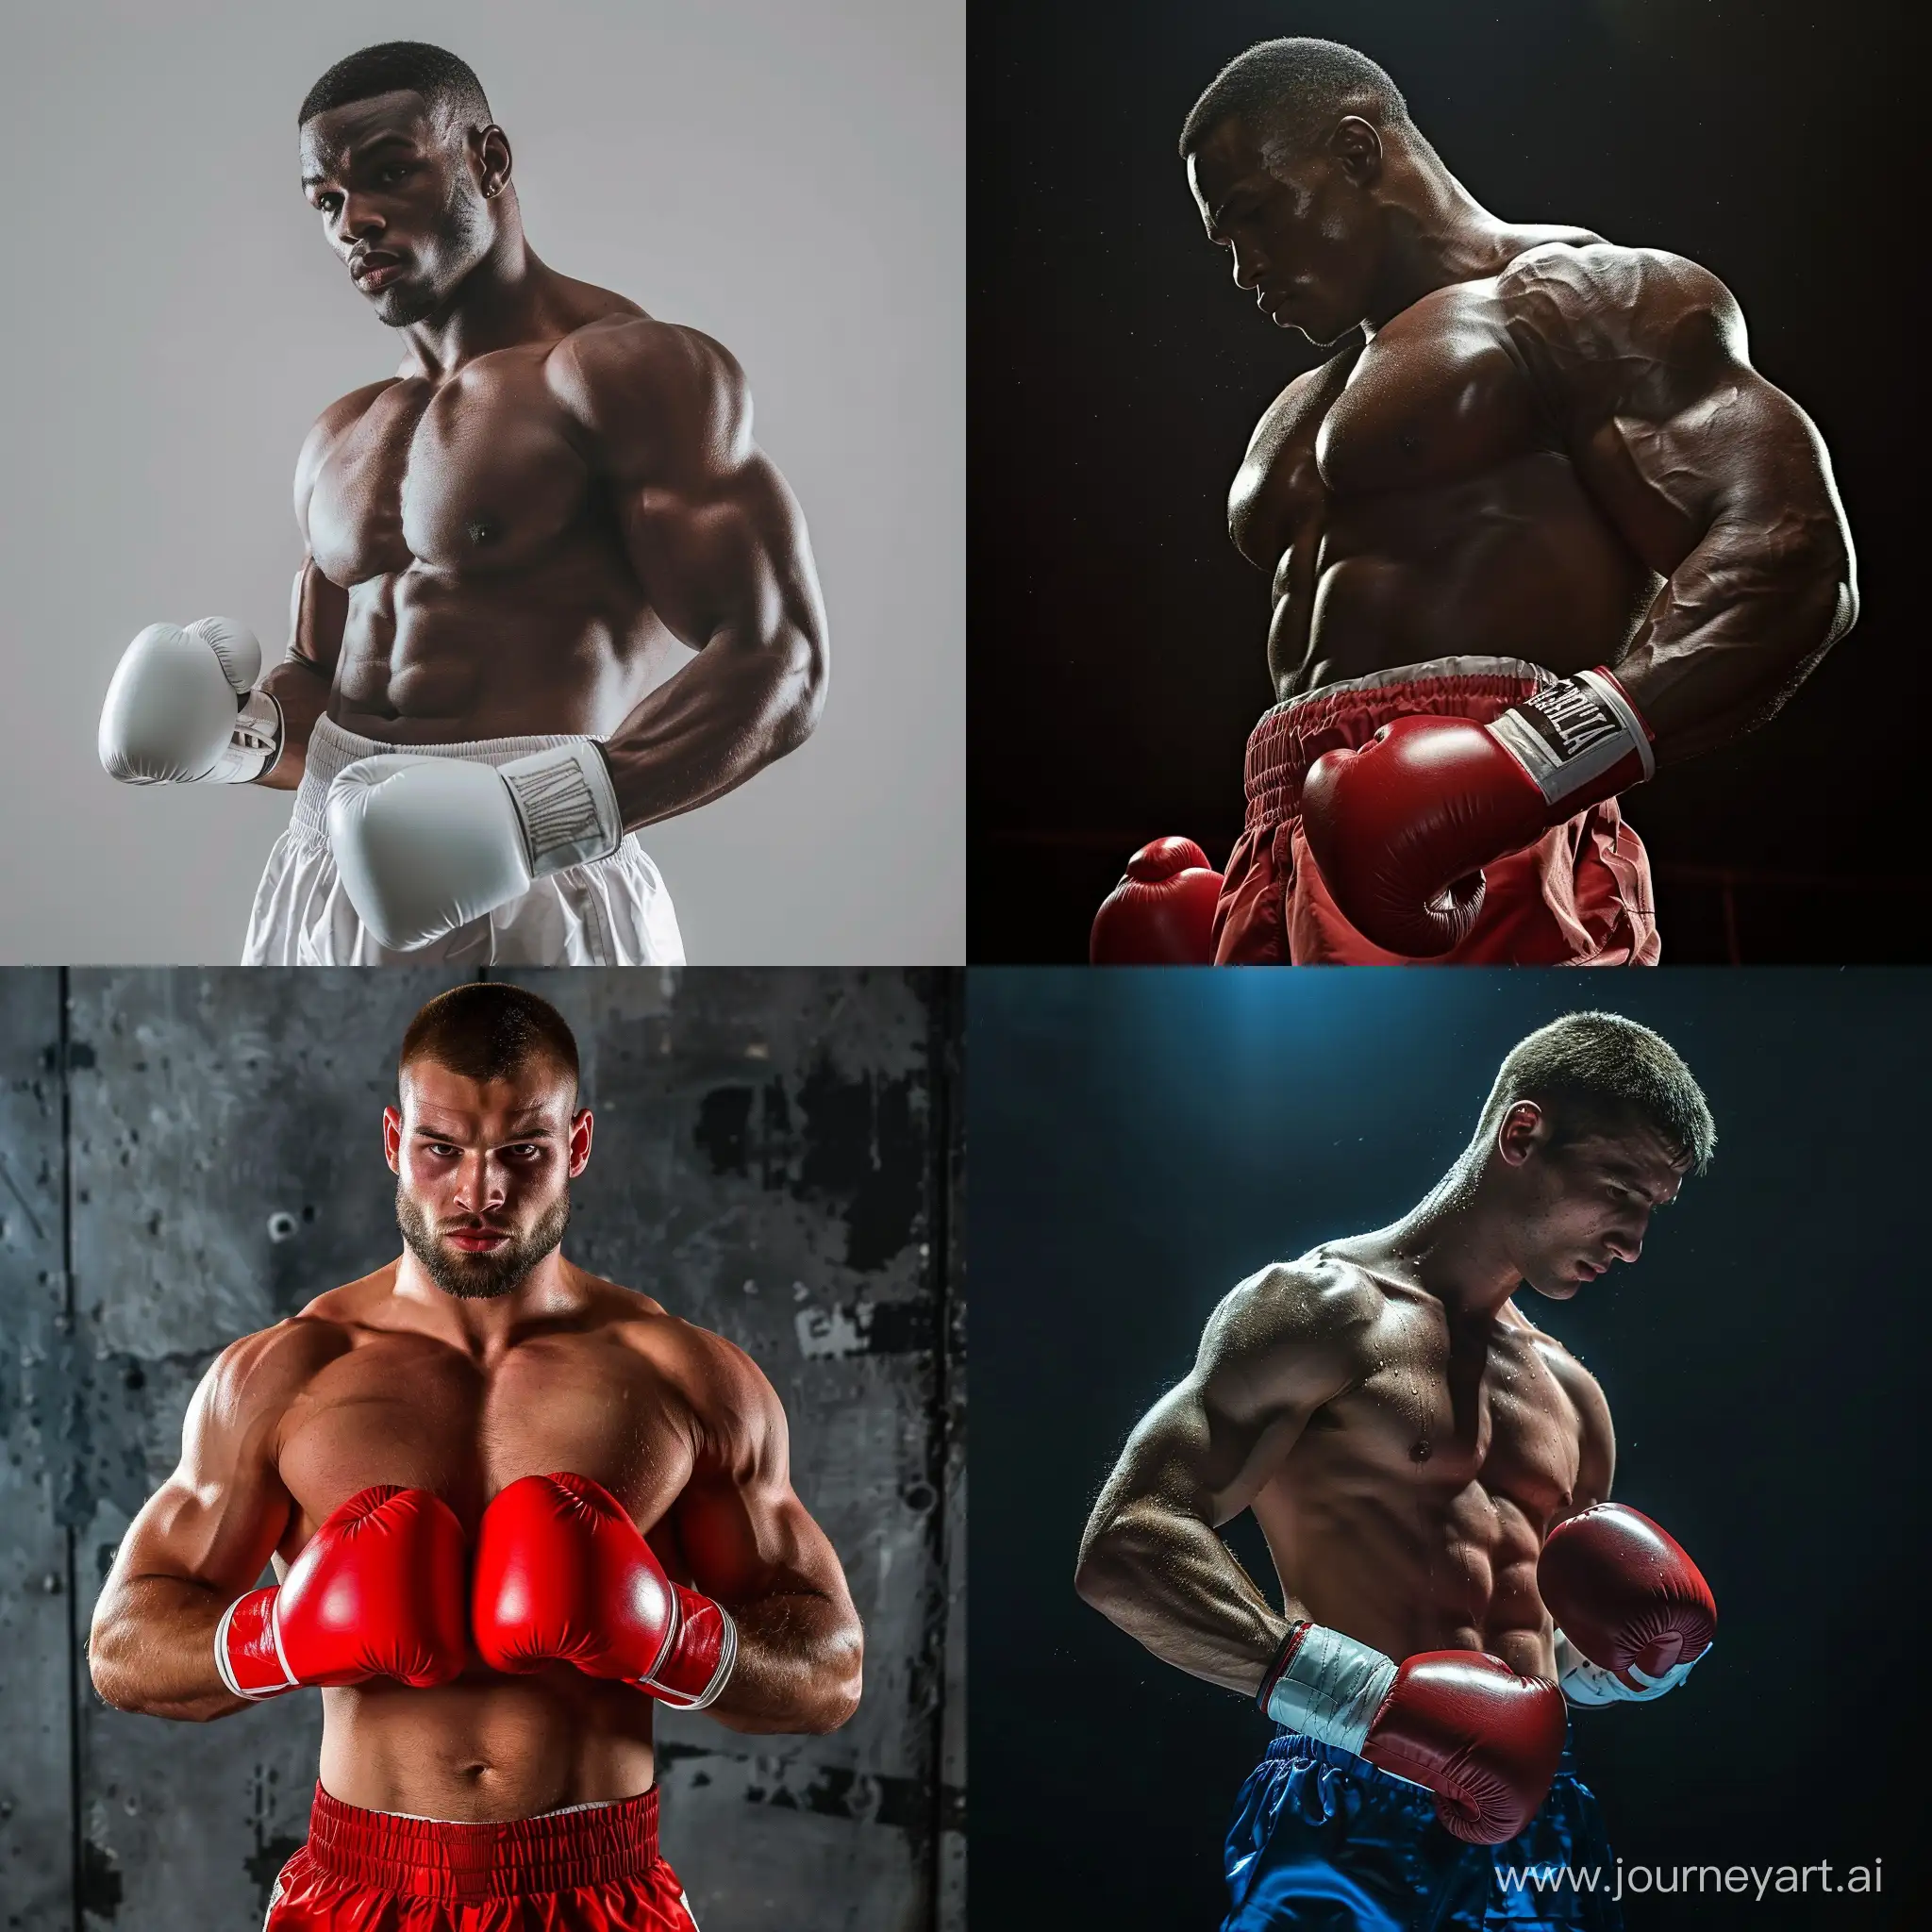 Muscular-Boxer-Training-in-Intense-Gym-Environment